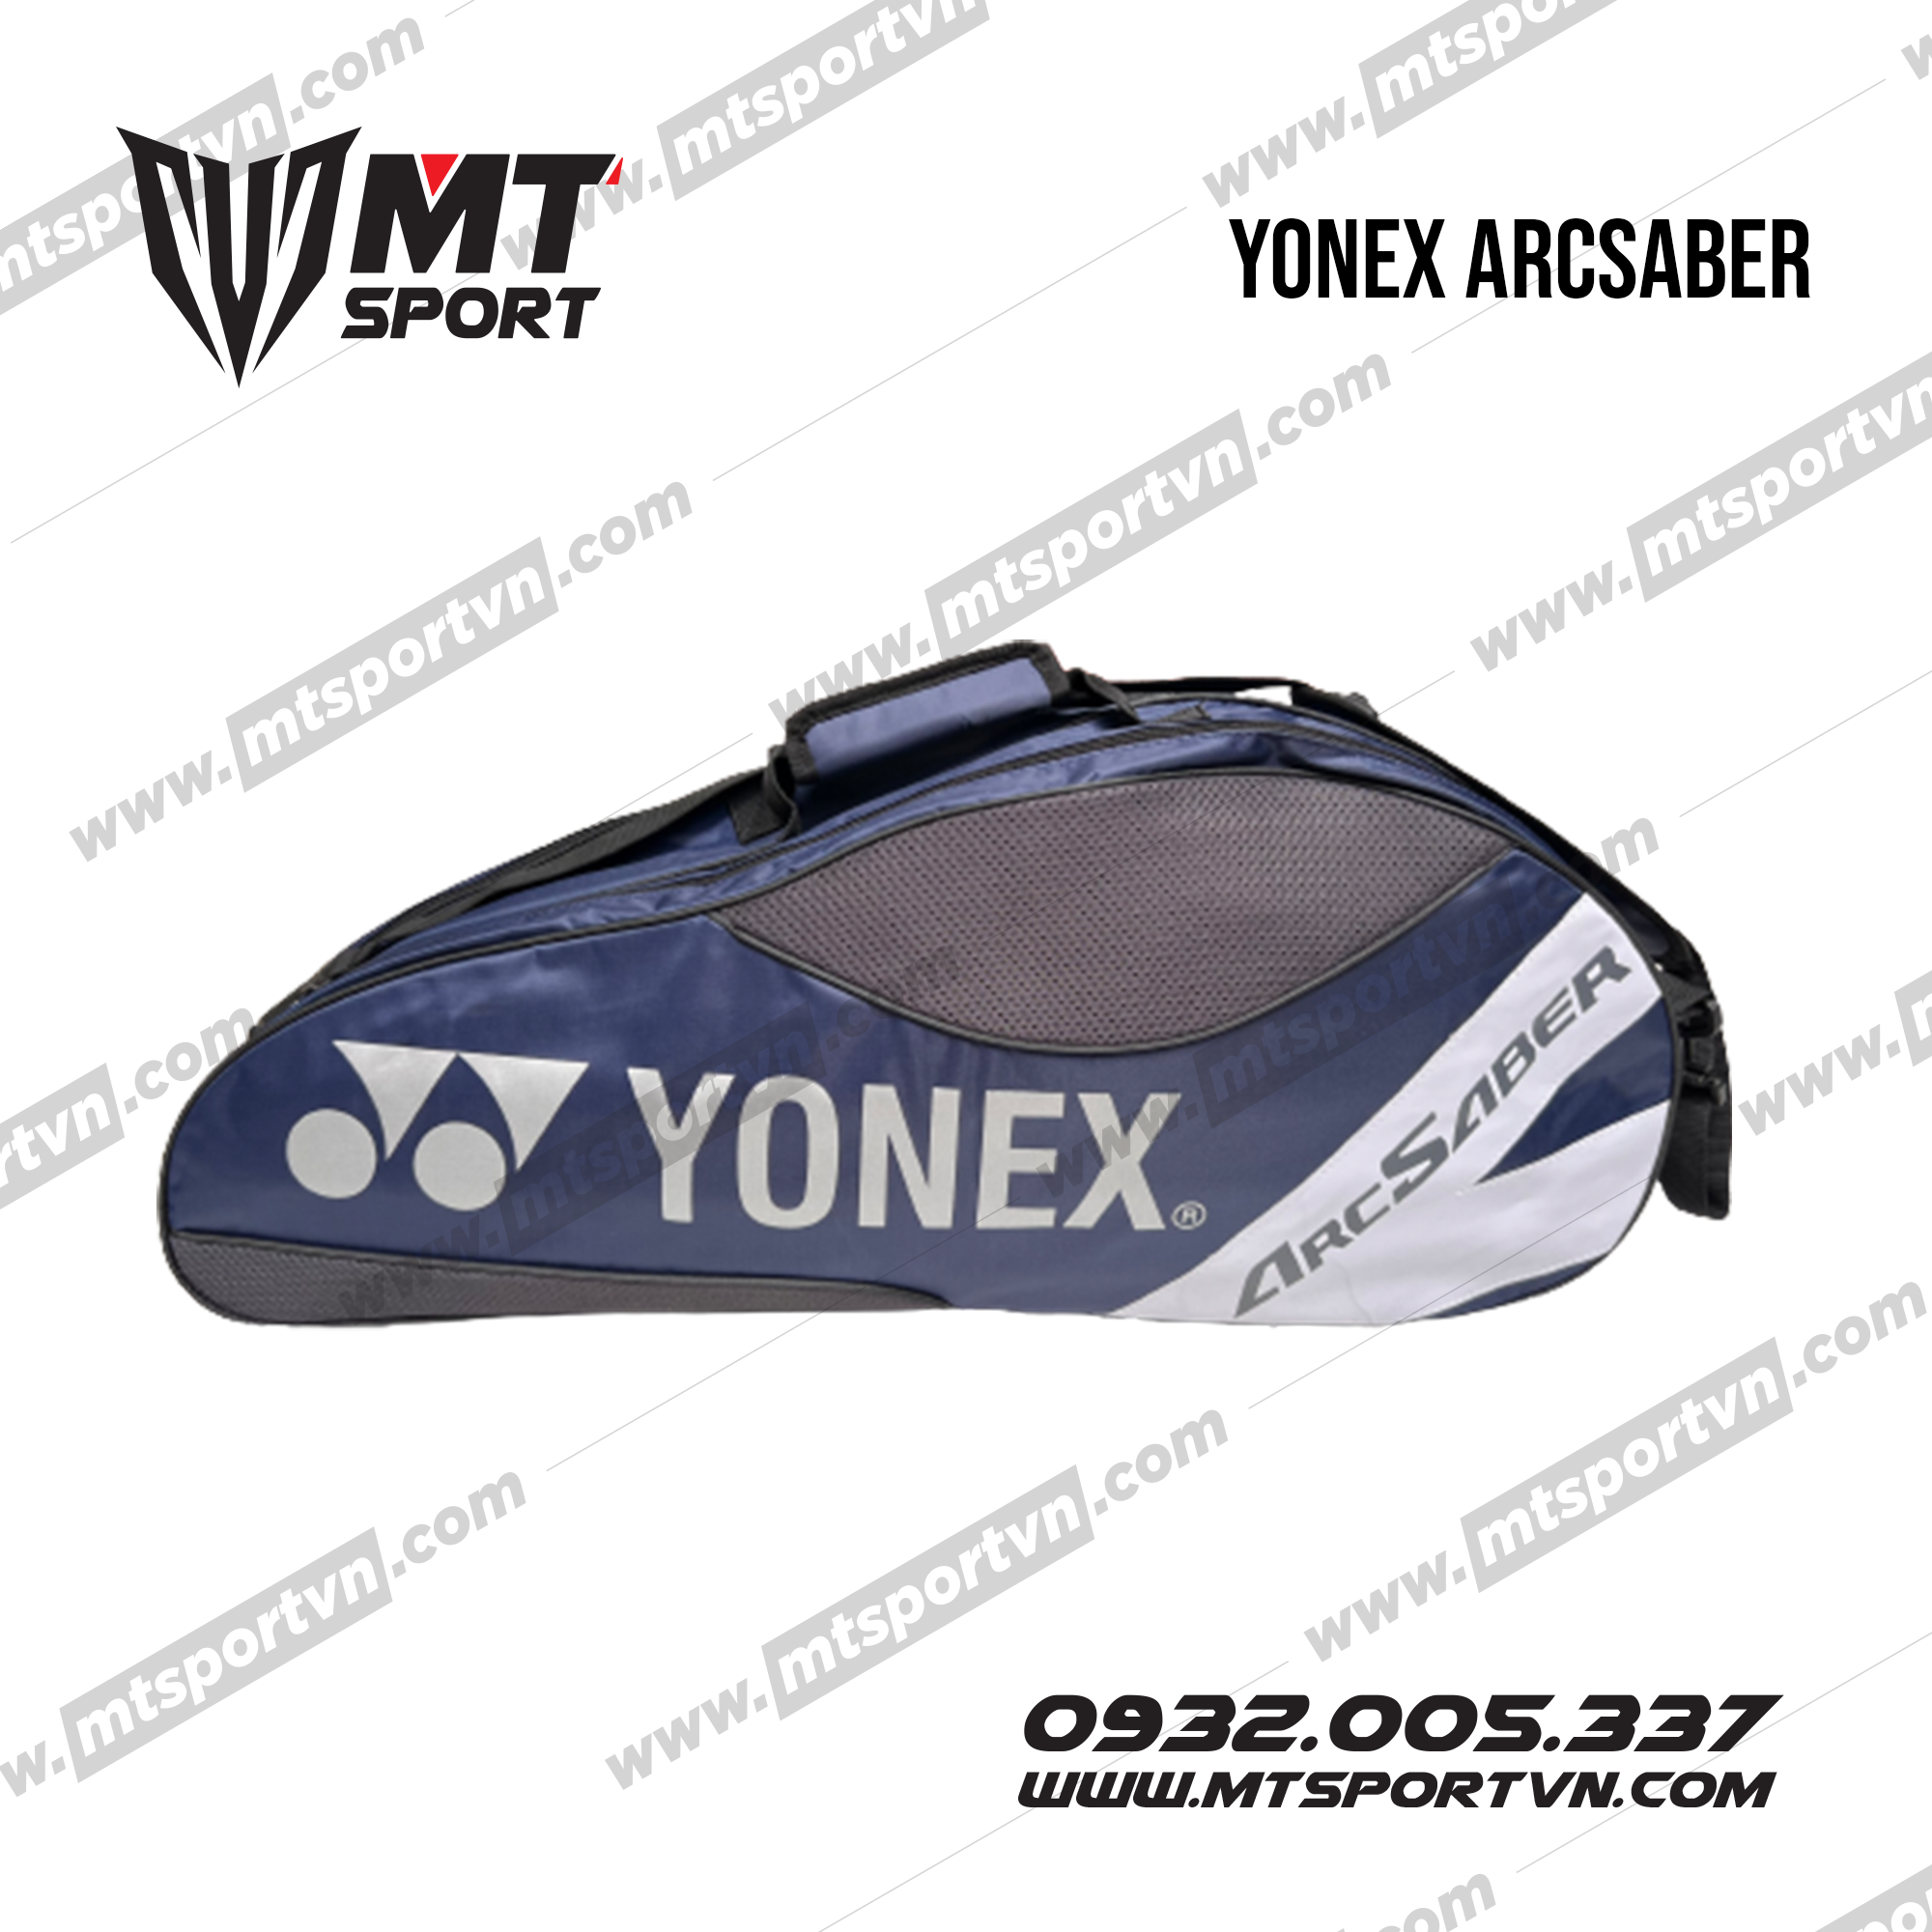 YONEX 1 Badminton Kit Bag, Navy with 1 GR 303 Badminton Racquet, Blue and  Pack of 6 Nylon Shuttlecock, Badminton Full Combo Kit Aluminum : Amazon.in:  Sports, Fitness & Outdoors